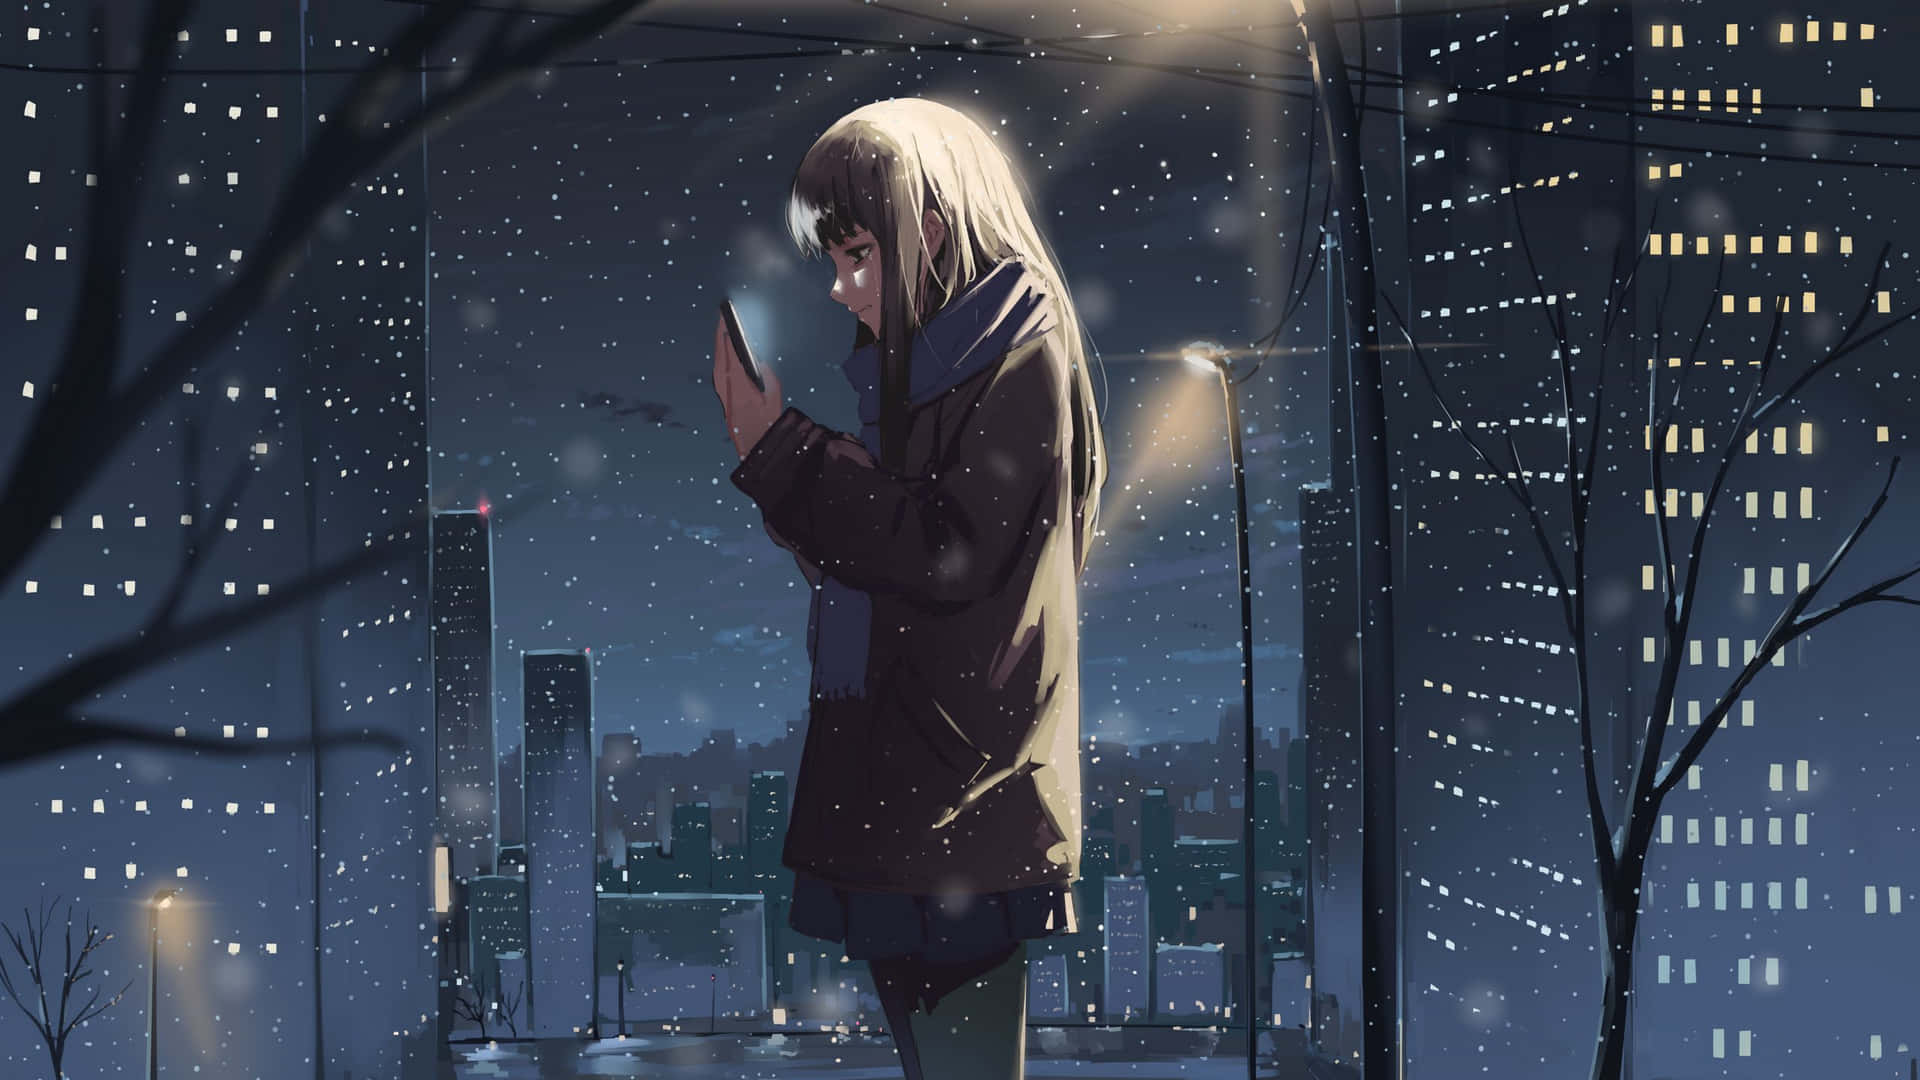 Winter Night Solitude Anime Art2560x1440 Wallpaper